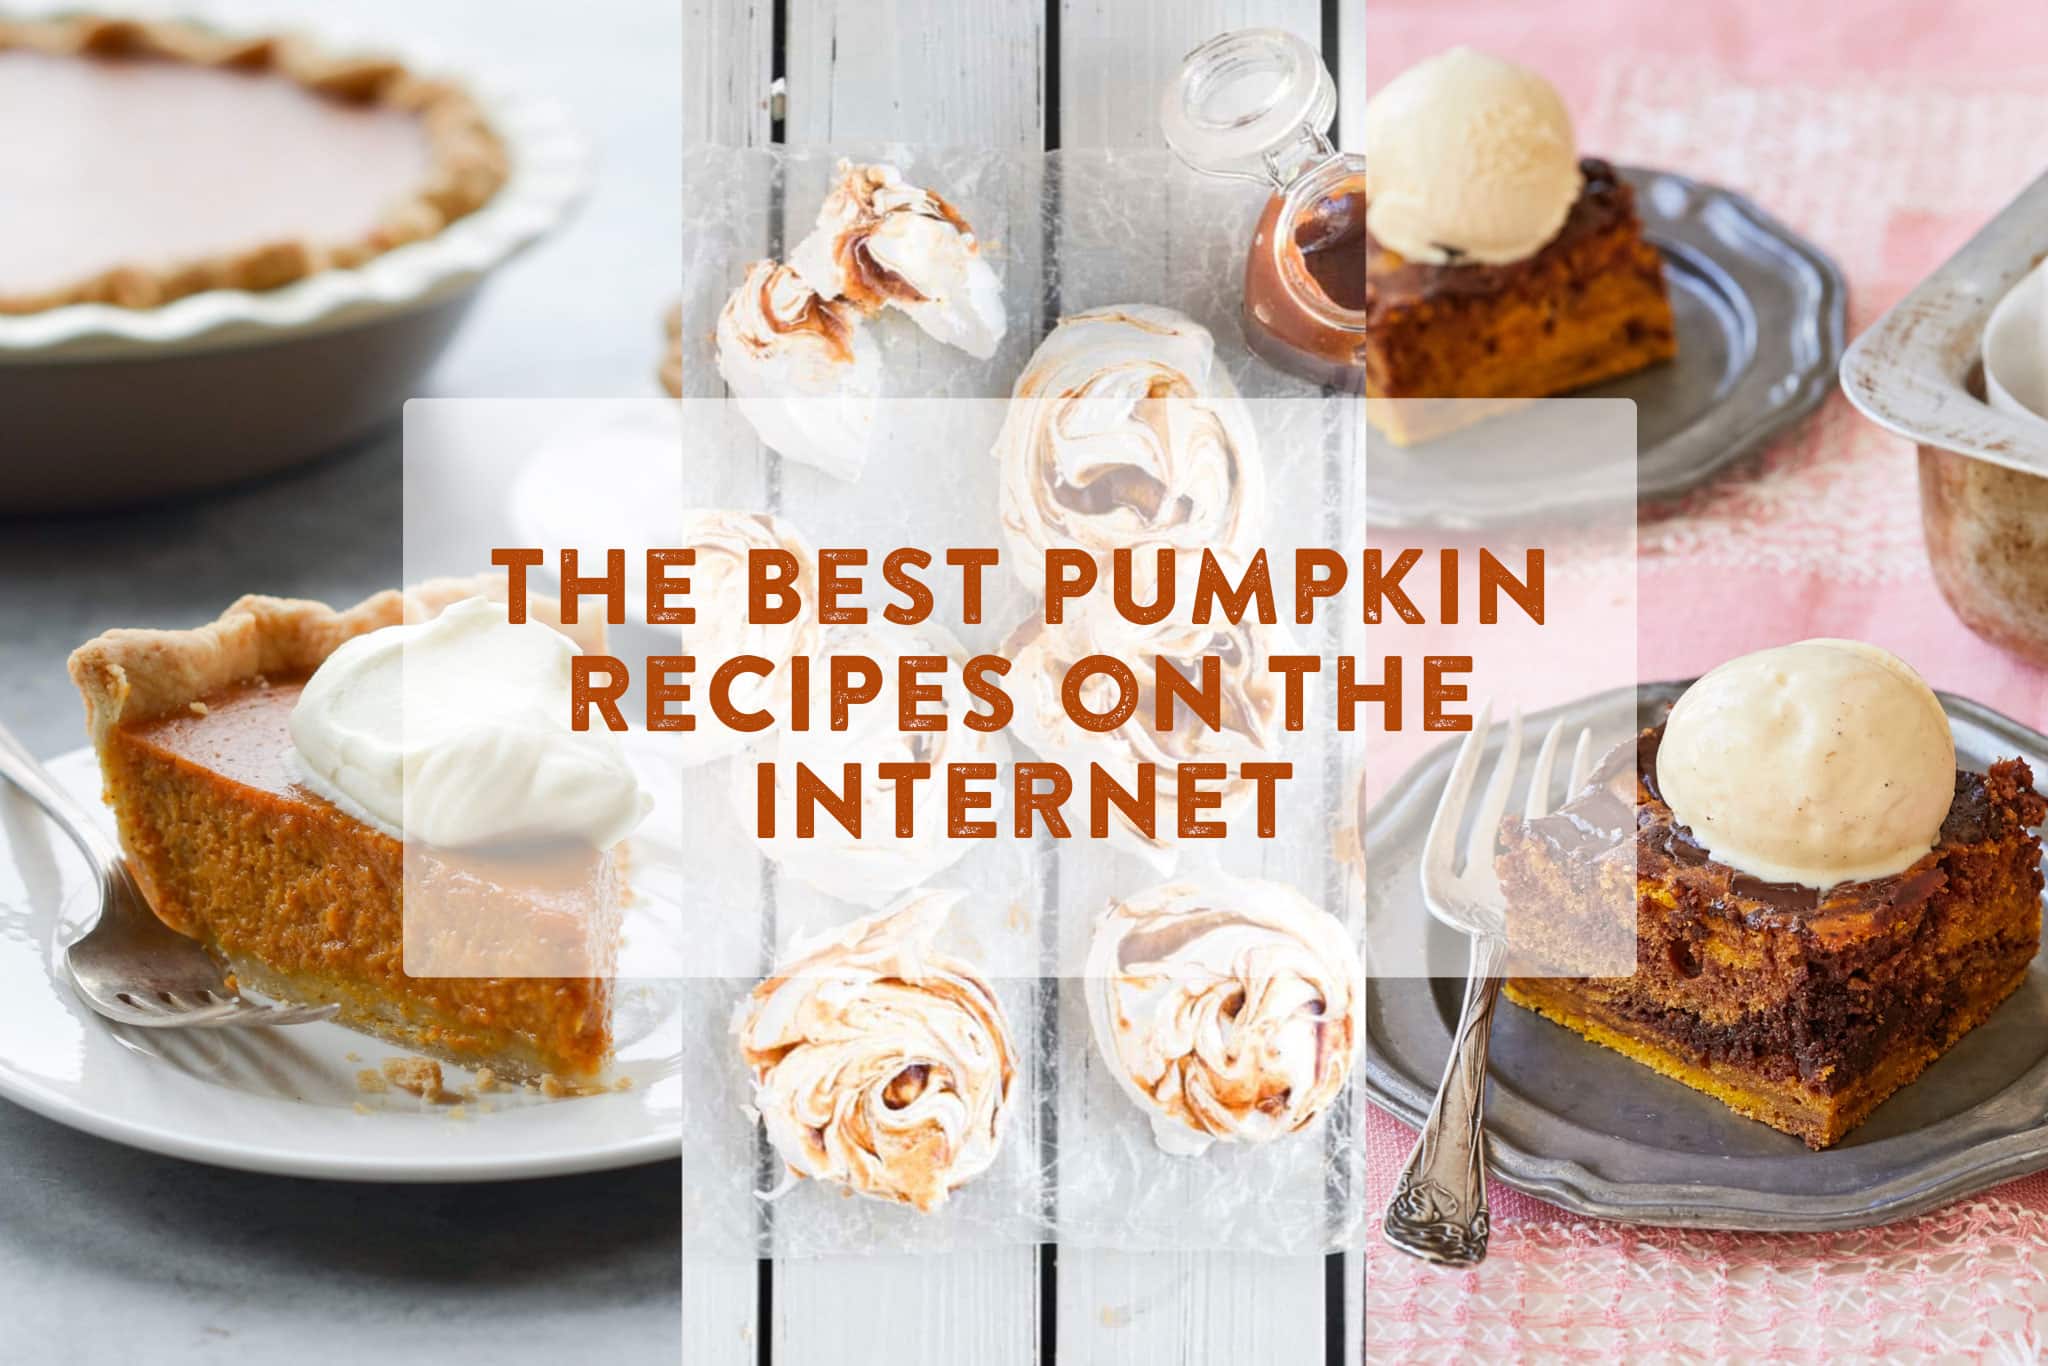 Photos of perfect pumpkin pie next to pumpkin butter pavlovas, next to marbled pumpkin pie brownies.